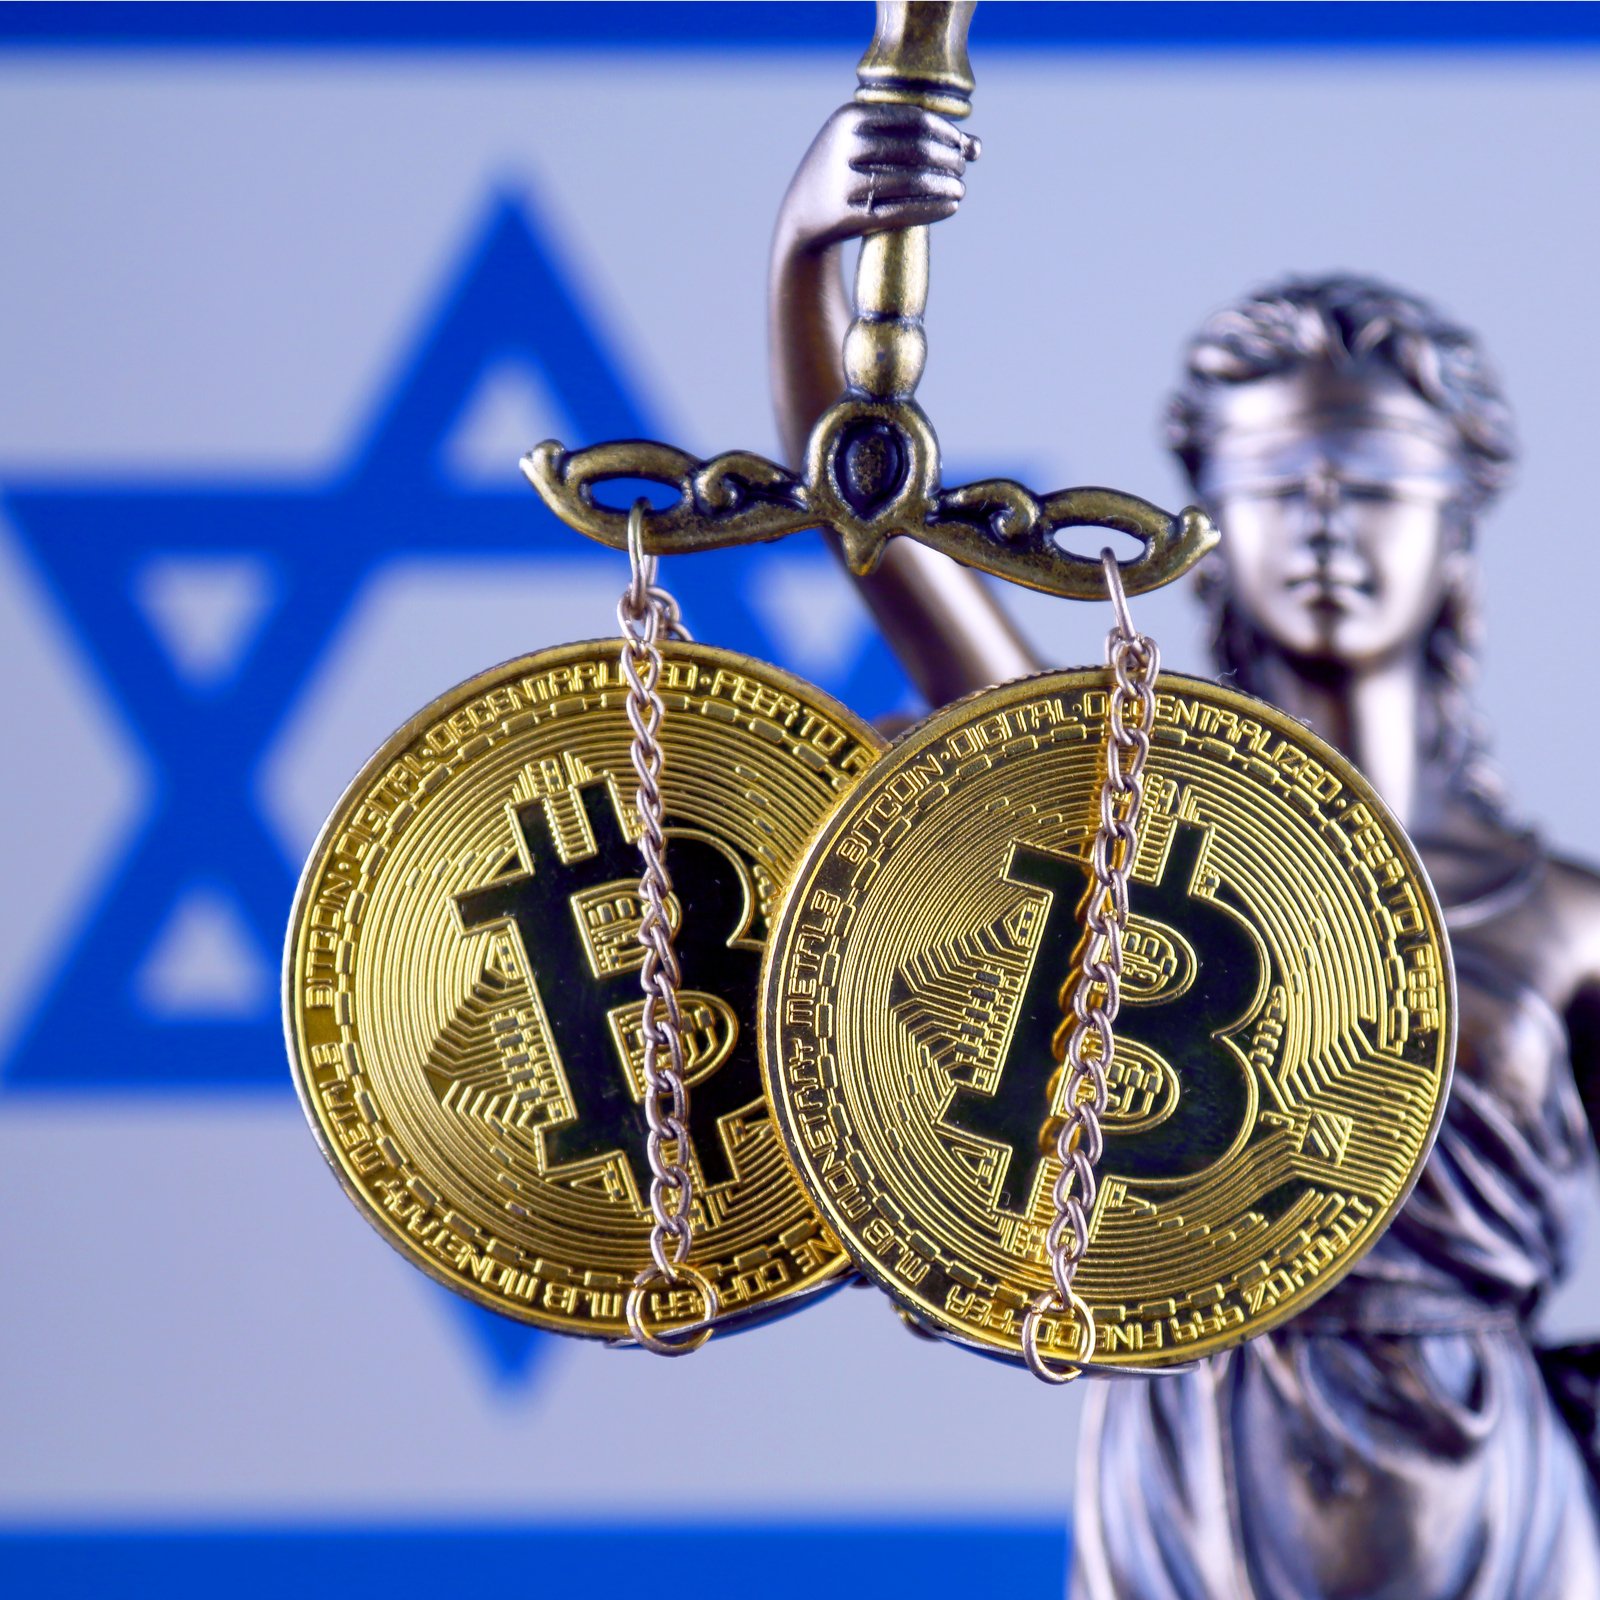 Israeli Regulator Investigating Public "Bitcoin" Company for False Claims